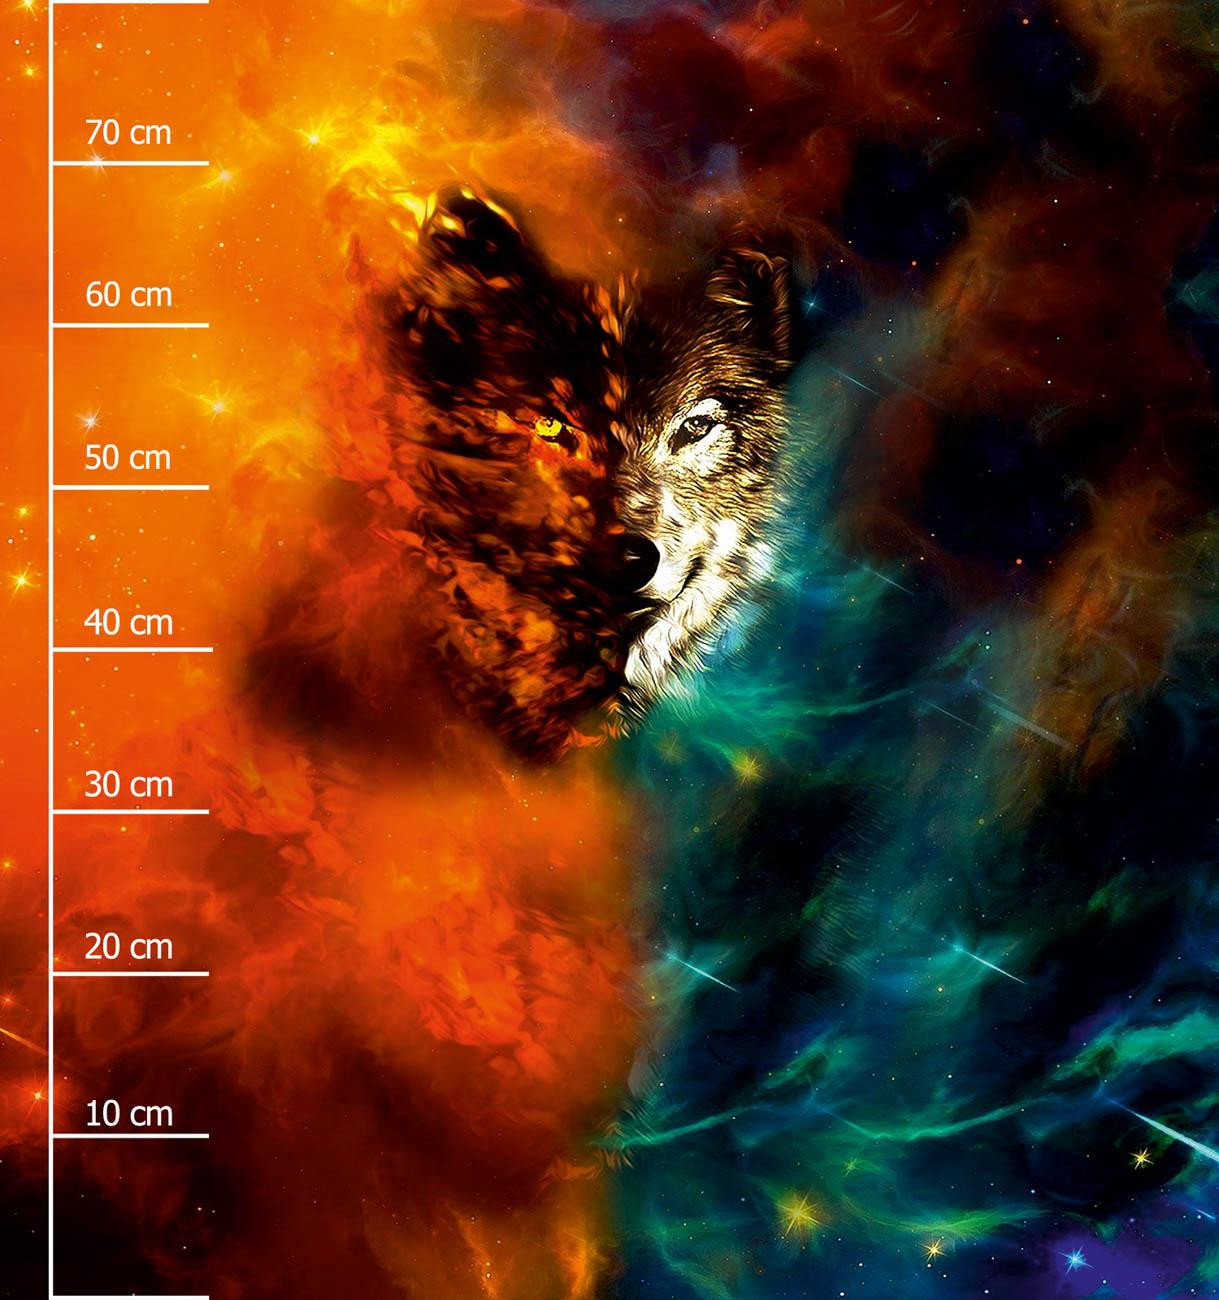 VLK / galaxie - panel (75cm x 80cm) SINGLE JERSEY ITY